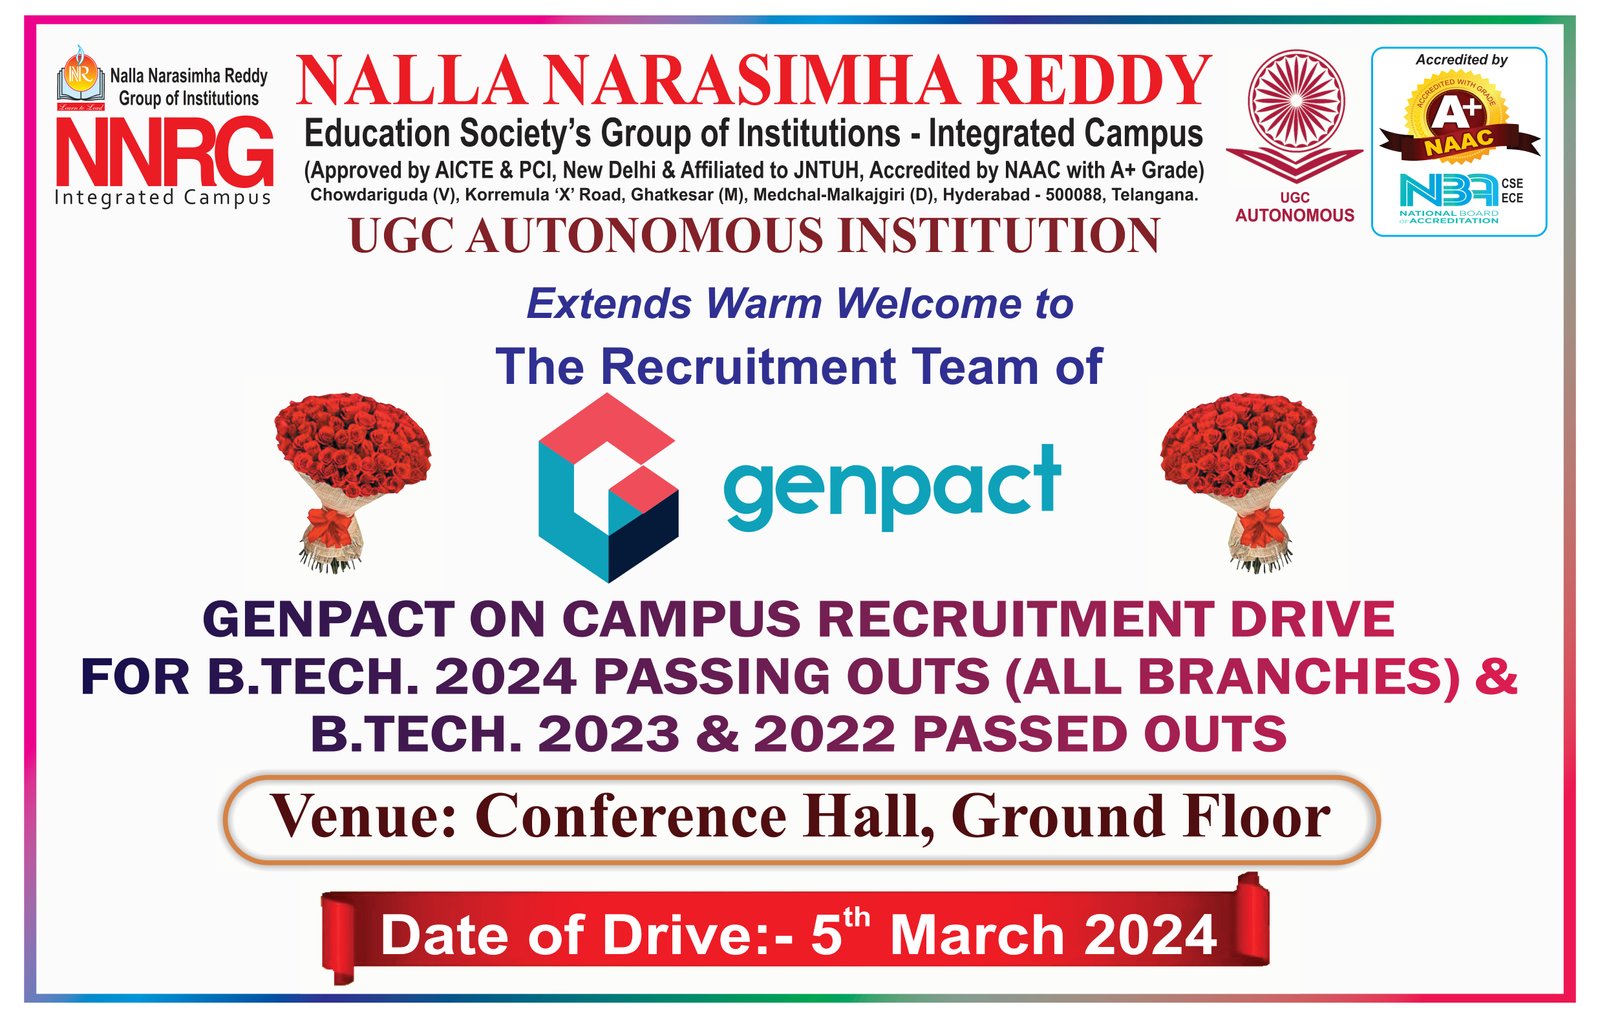 Nalla Narasimha Reddy Group of Institutions. on X: 